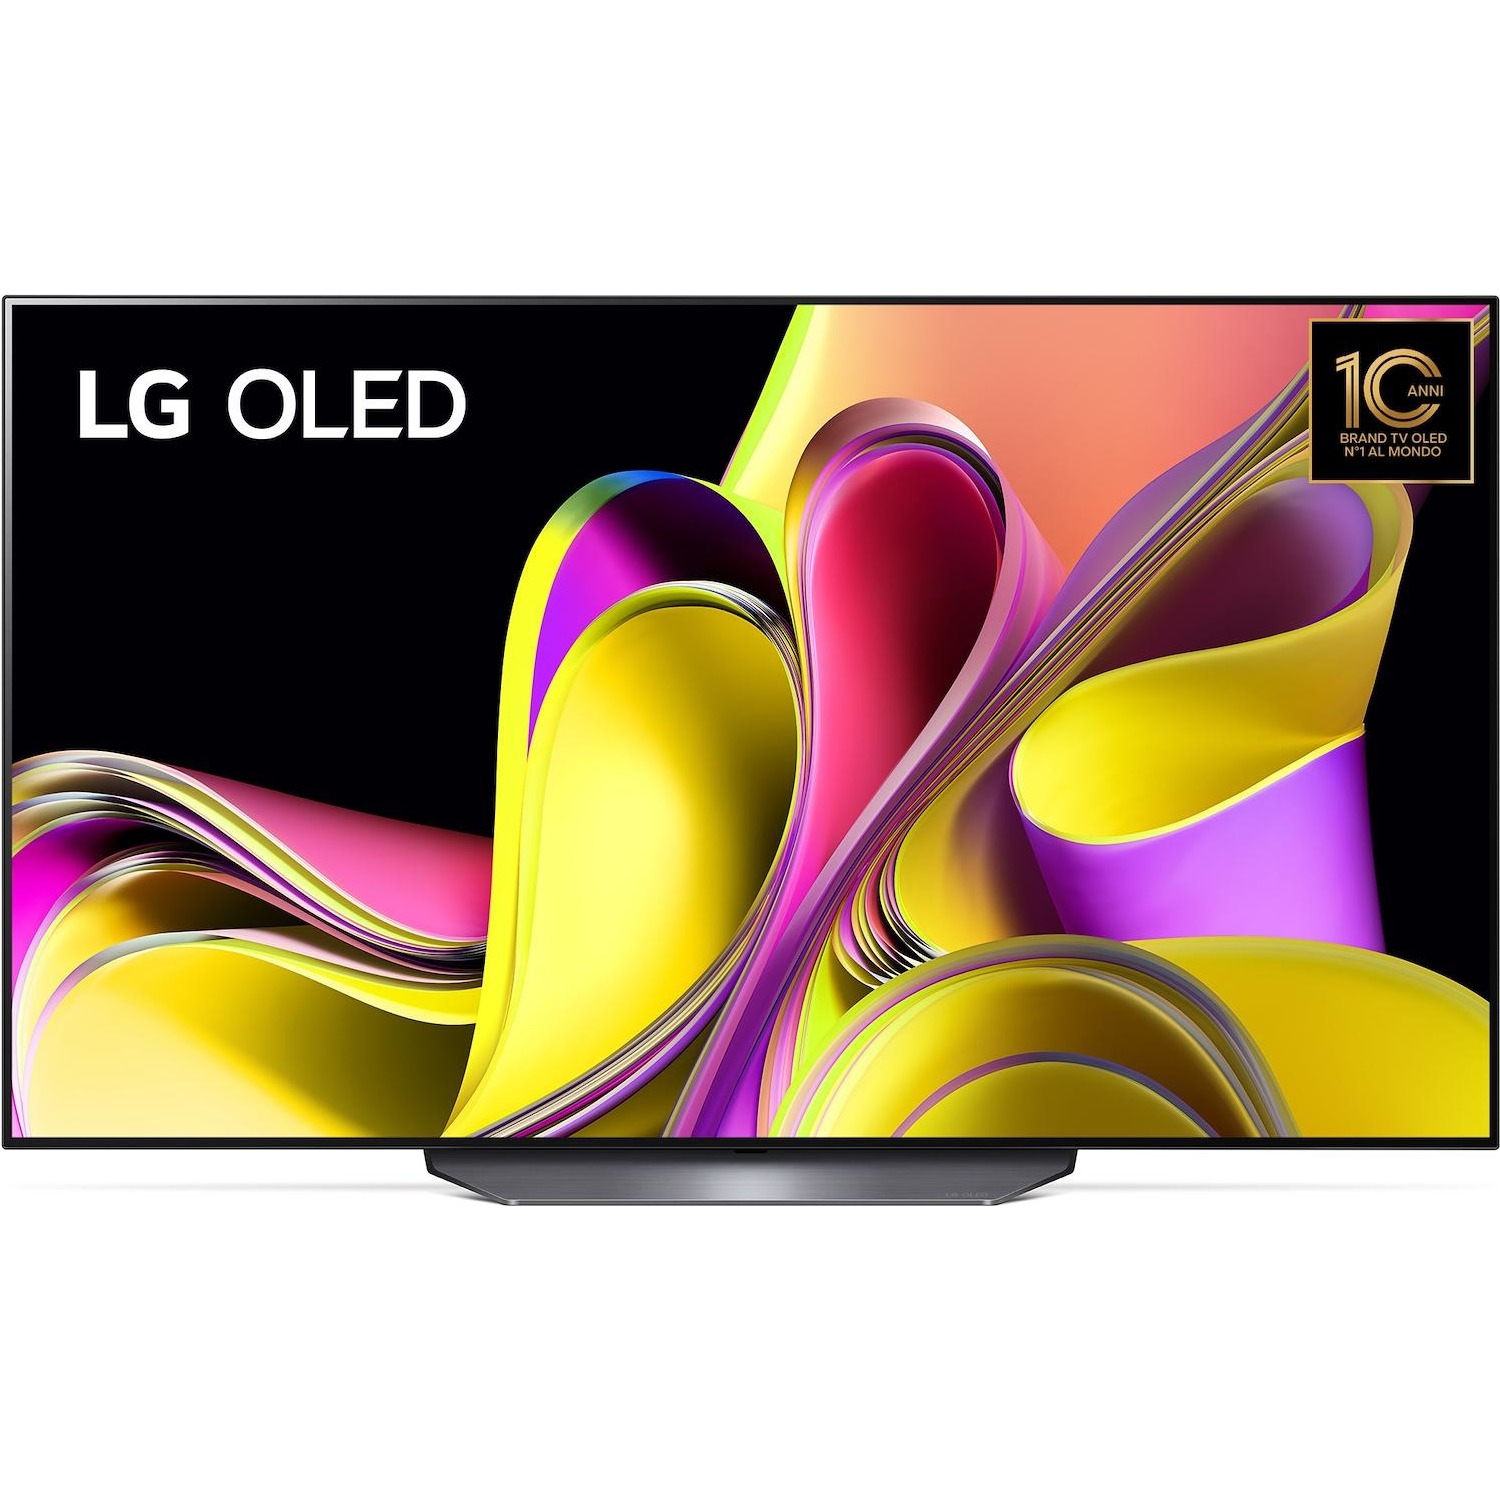 Immagine per TV OLED UHD 4K Smart LG OLED77B36 da DIMOStore